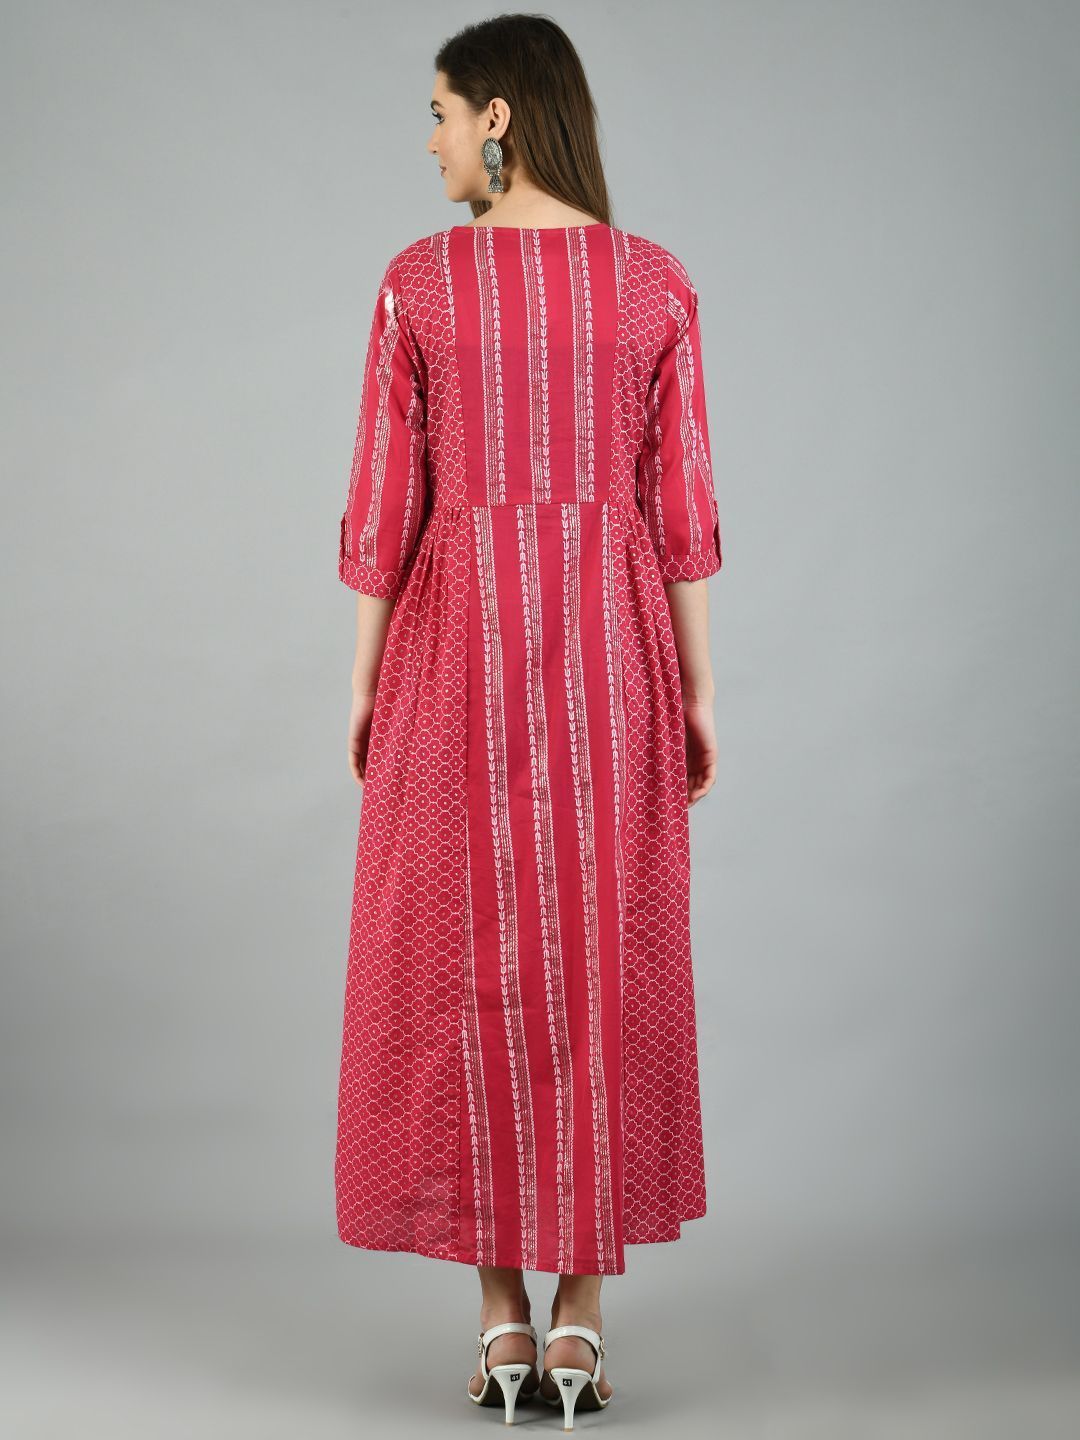 Women's Pink Cotton Printed 3/4 Sleeve Round Neck Casual Dress - Myshka